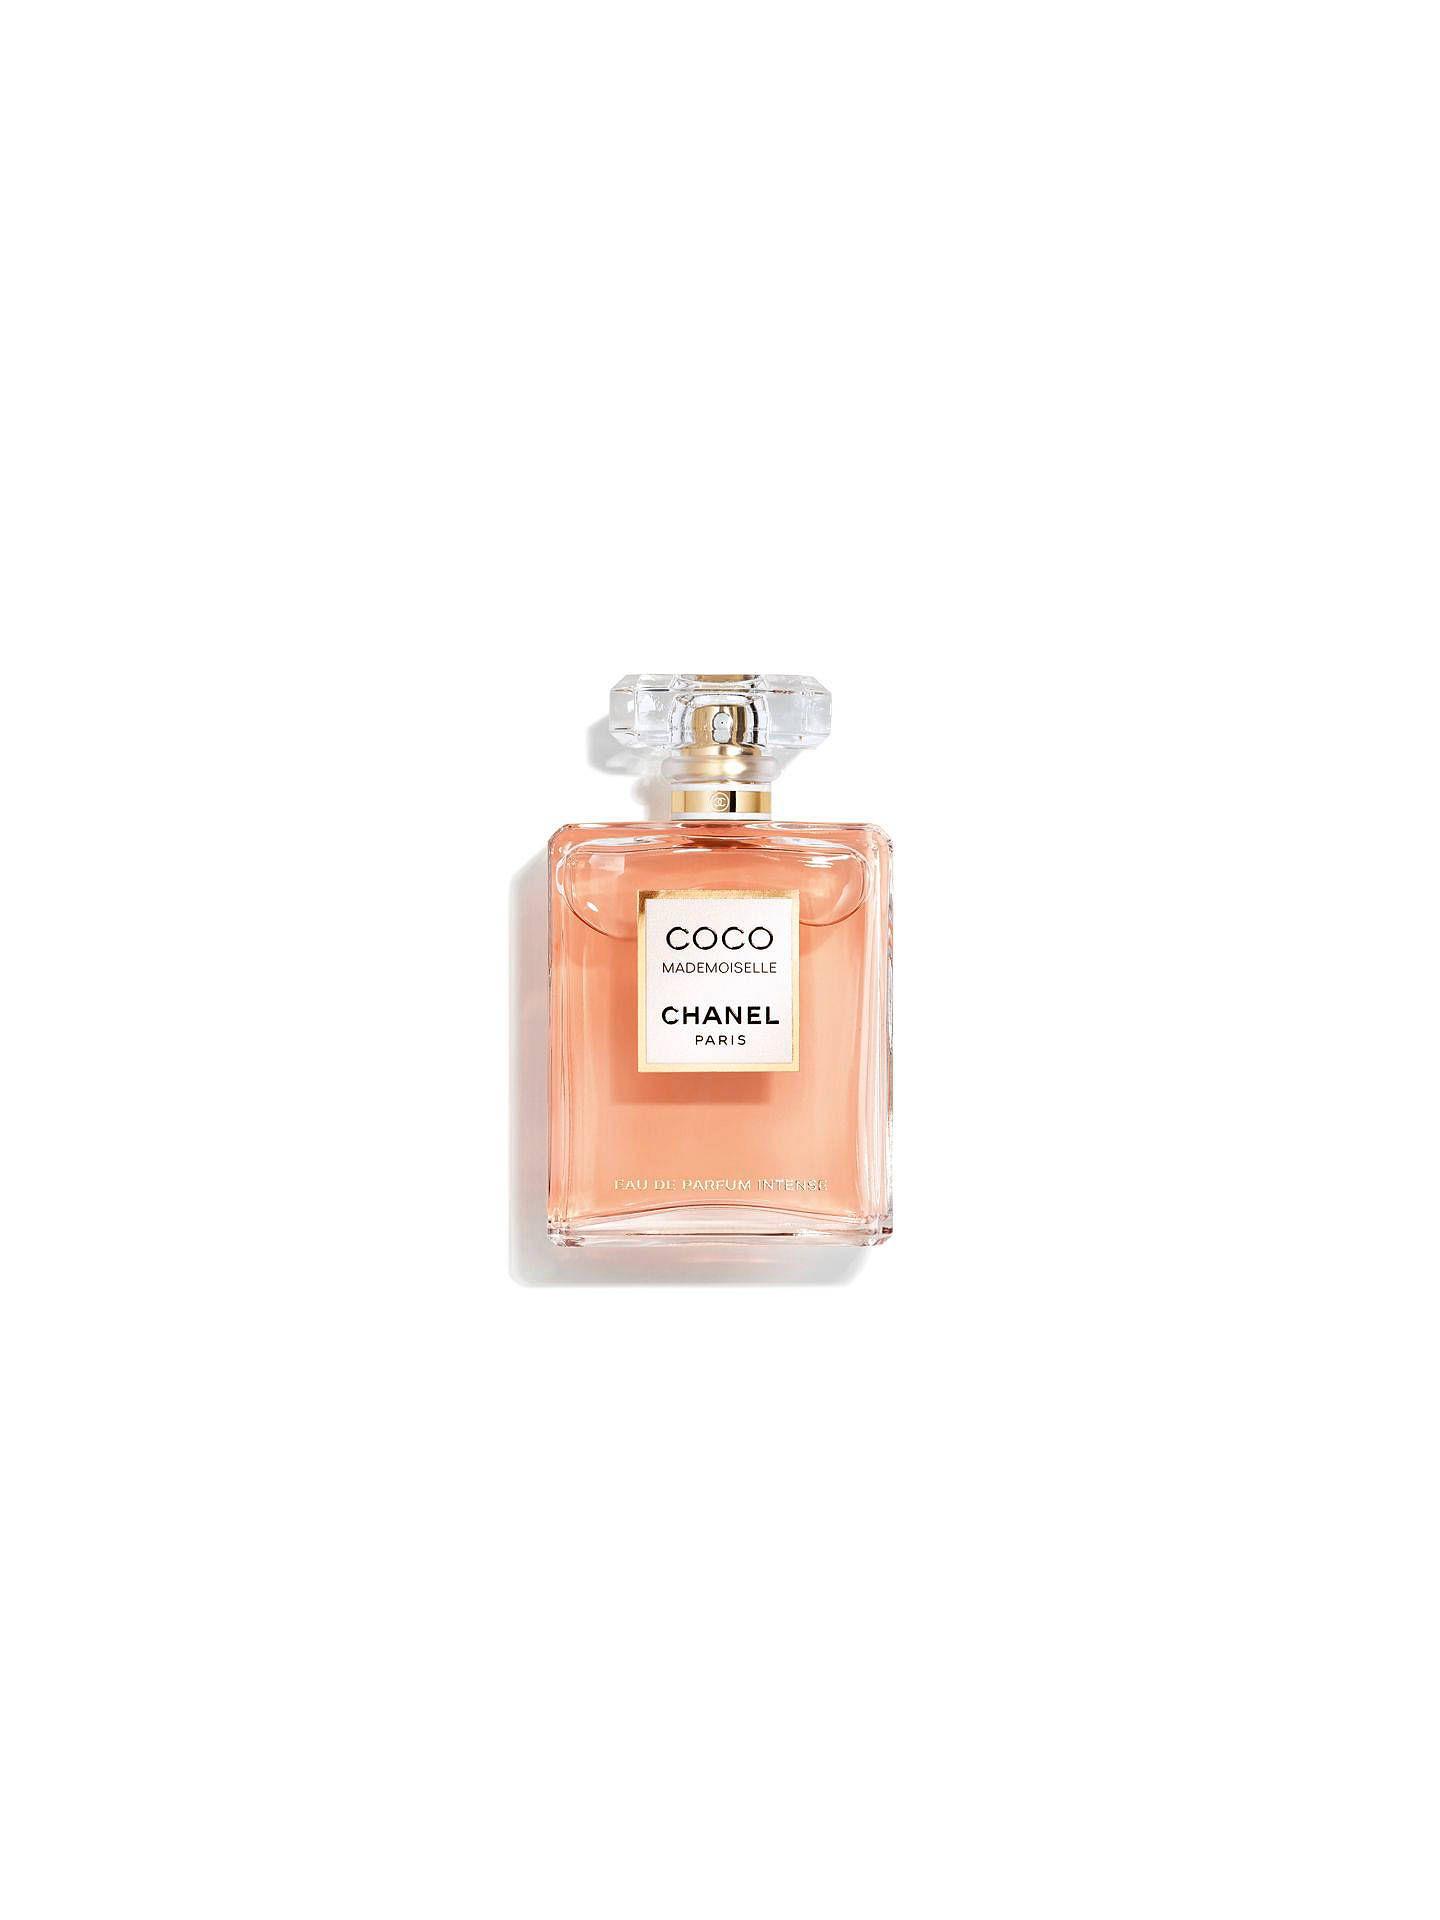 Coco Chanel Perfume Logo - CHANEL COCO MADEMOISELLE Eau de Parfum Intense Spray at John Lewis